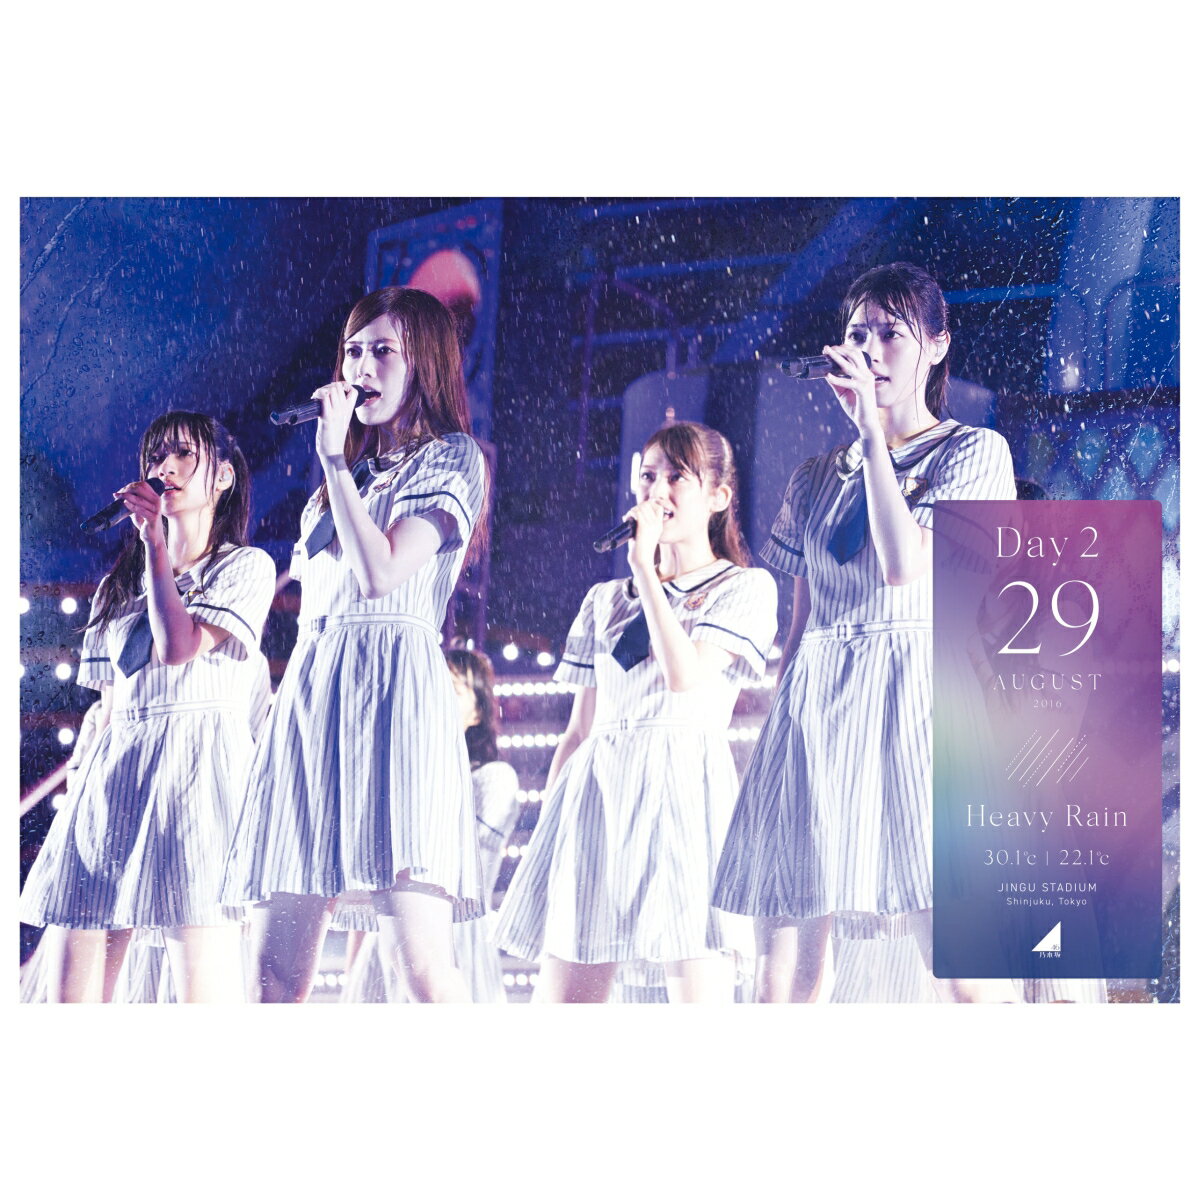 乃木坂46 4th YEAR BIRTHDAY LIVE 2016.8.28-30 JINGU STADIUM Day2【Blu-ray】